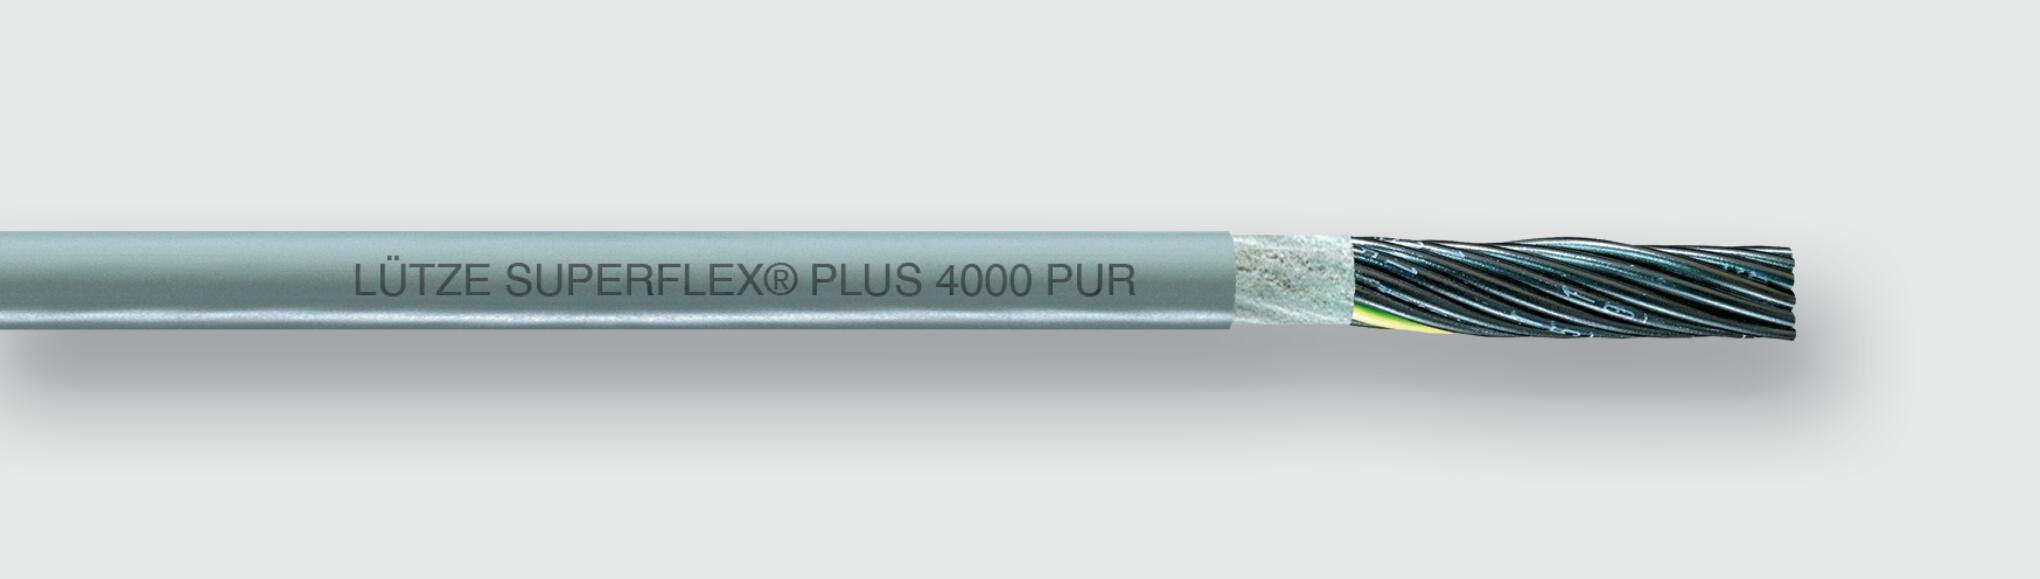 113122 - PUR control cables - C-track compatible